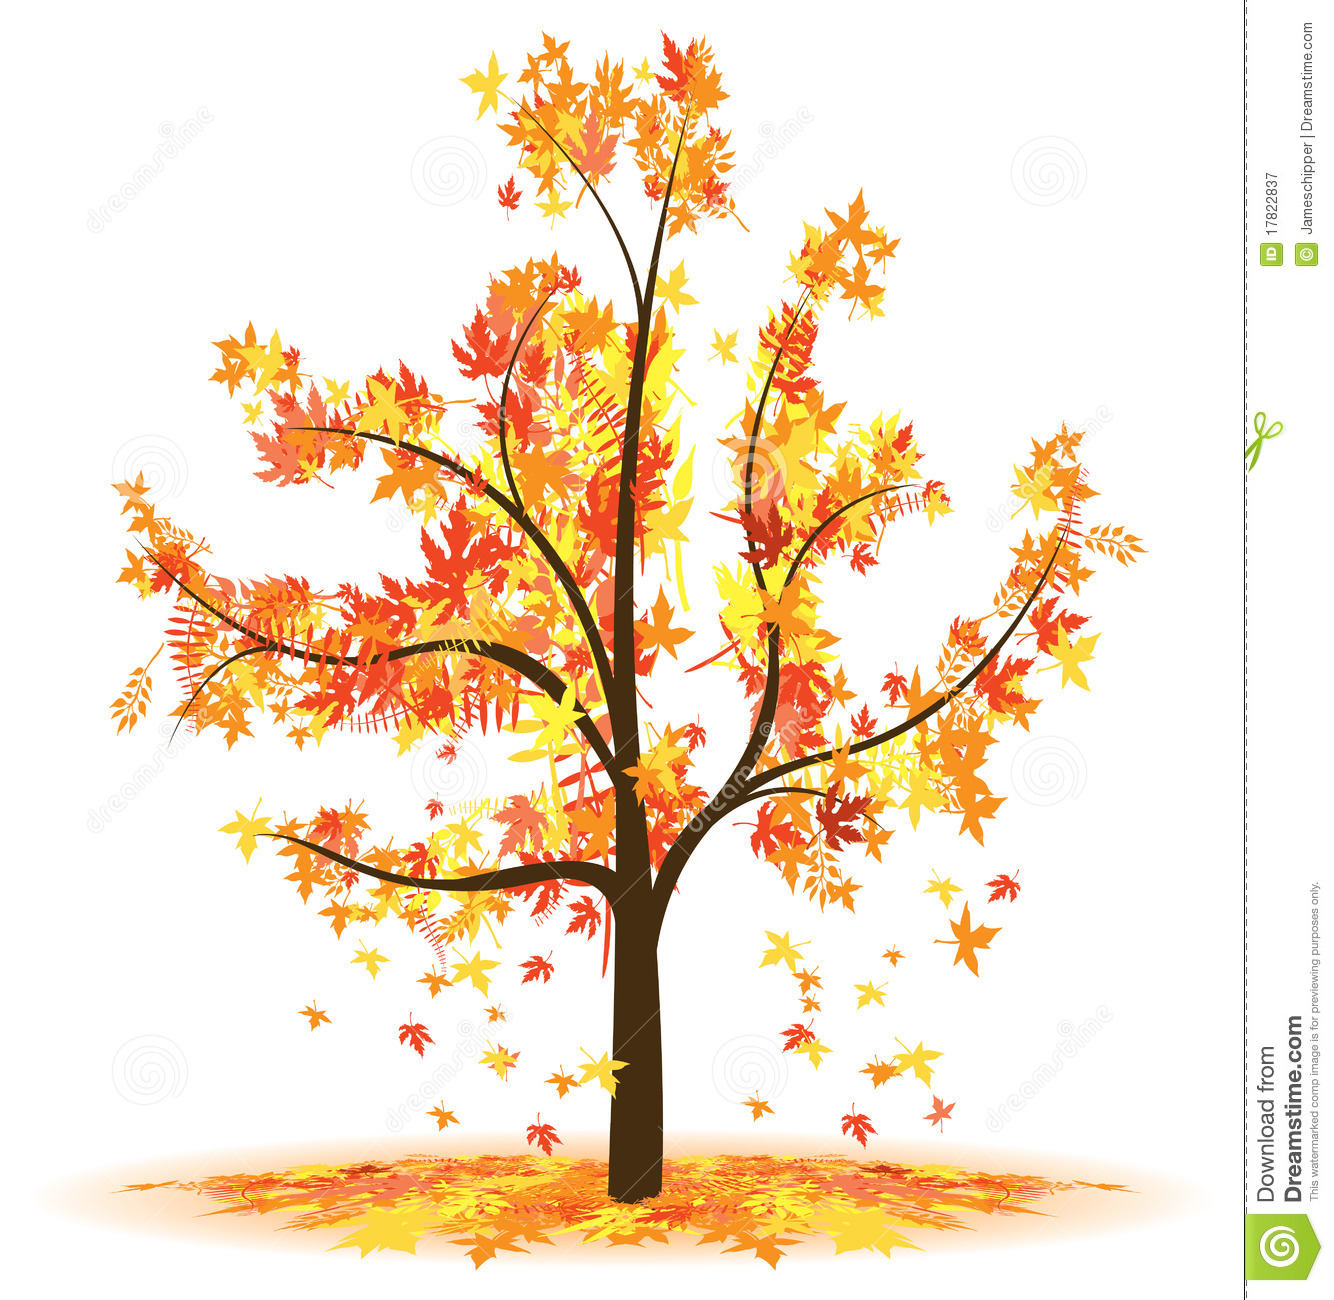 Autumn Tree Royalty Free Stock Photography   Image  17822837